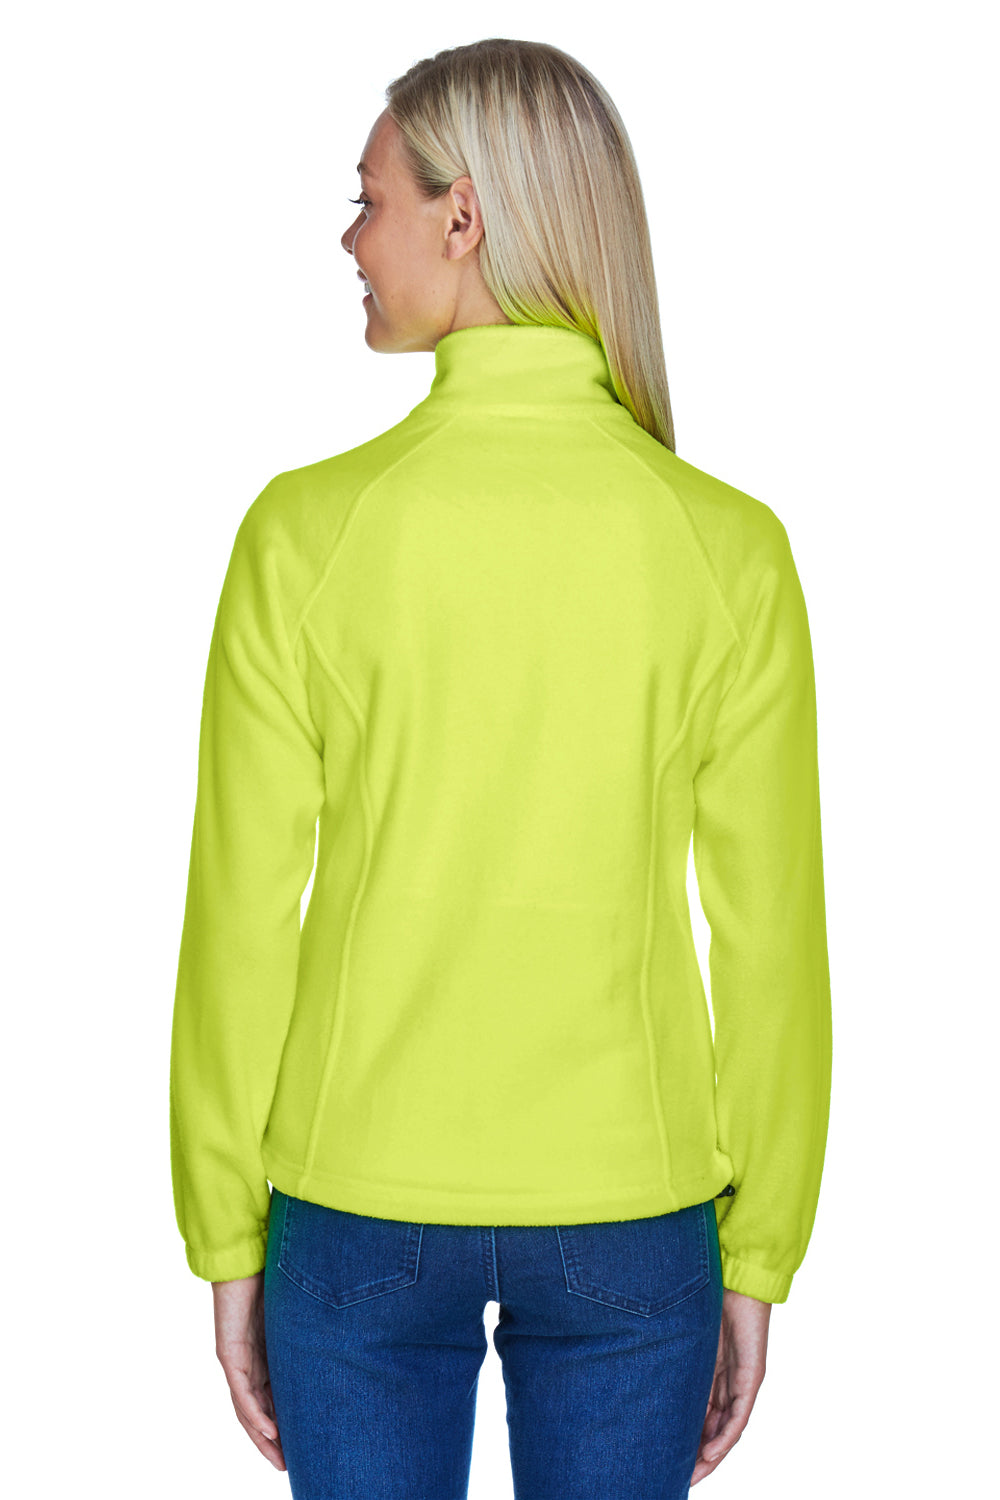 Harriton M990W Womens Full Zip Fleece Jacket Safety Yellow Back